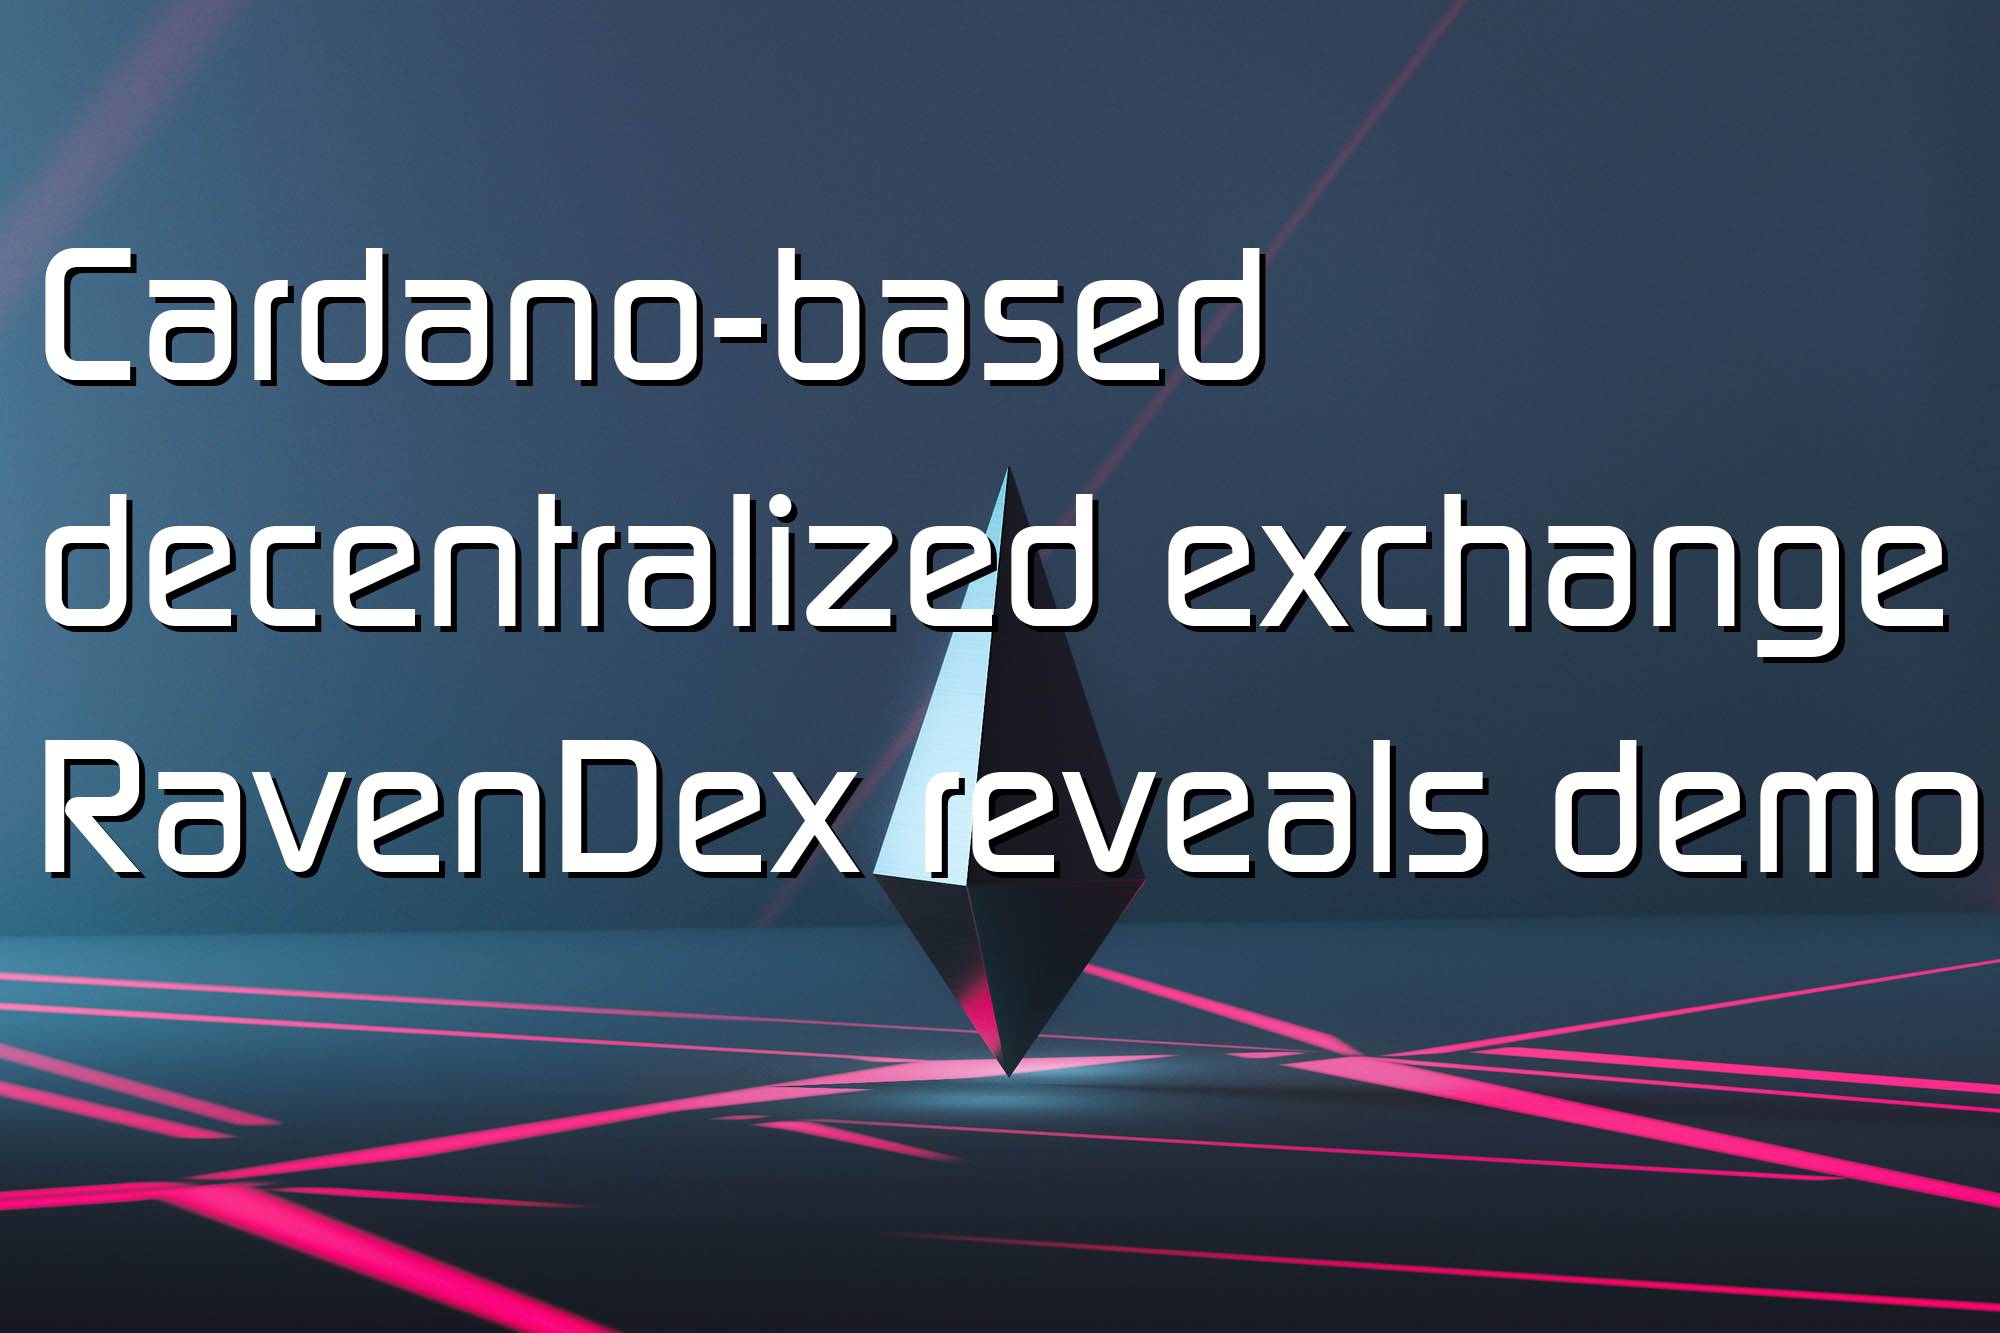 @$61167.15 Cardano-based decentralized exchange RavenDex reveals demo